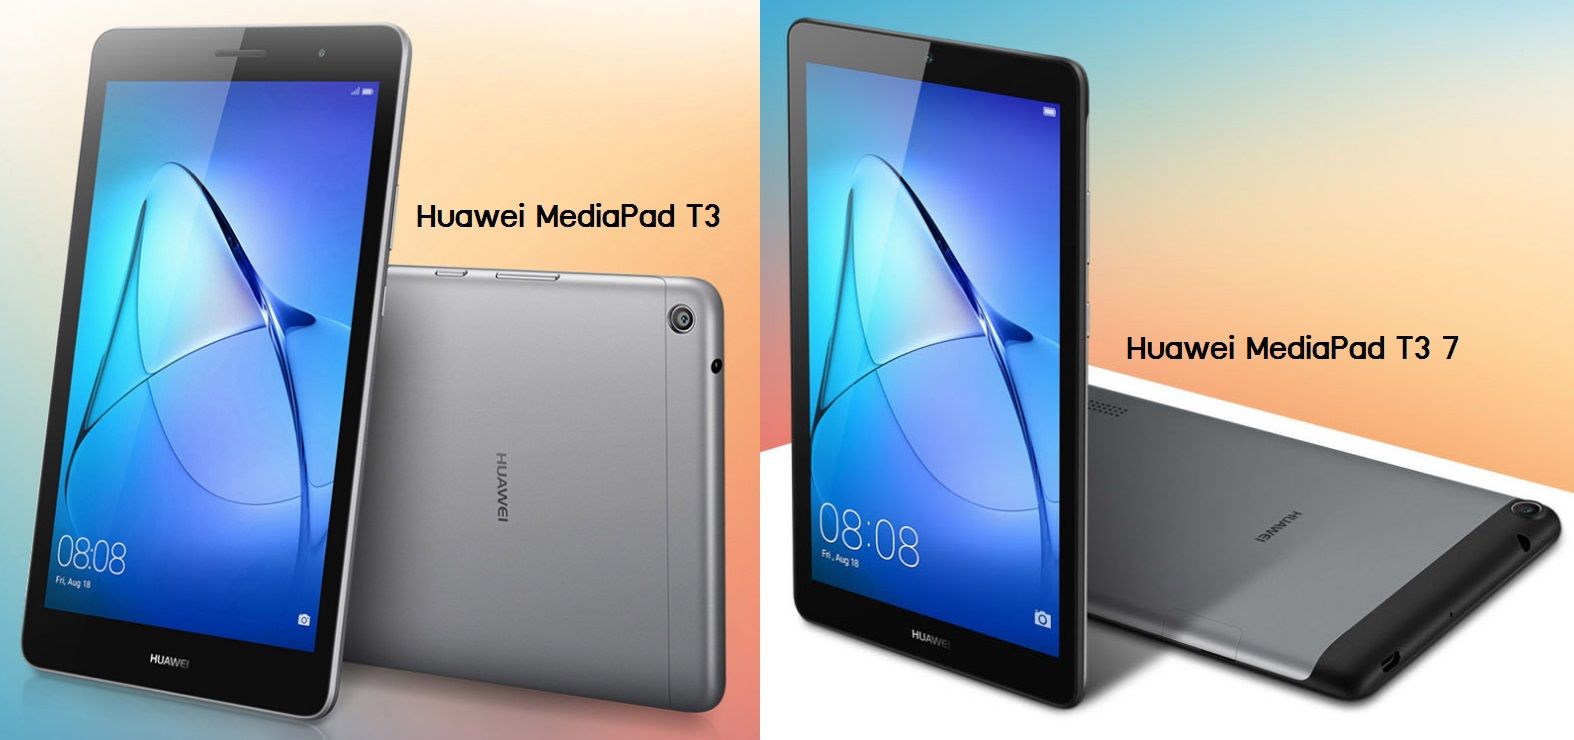 Huawei เผยโฉมแท็บเล็ต Android ราคาประหยัดสองรุ่นสองขนาด MediaPad T3 และ MediaPad T3 7